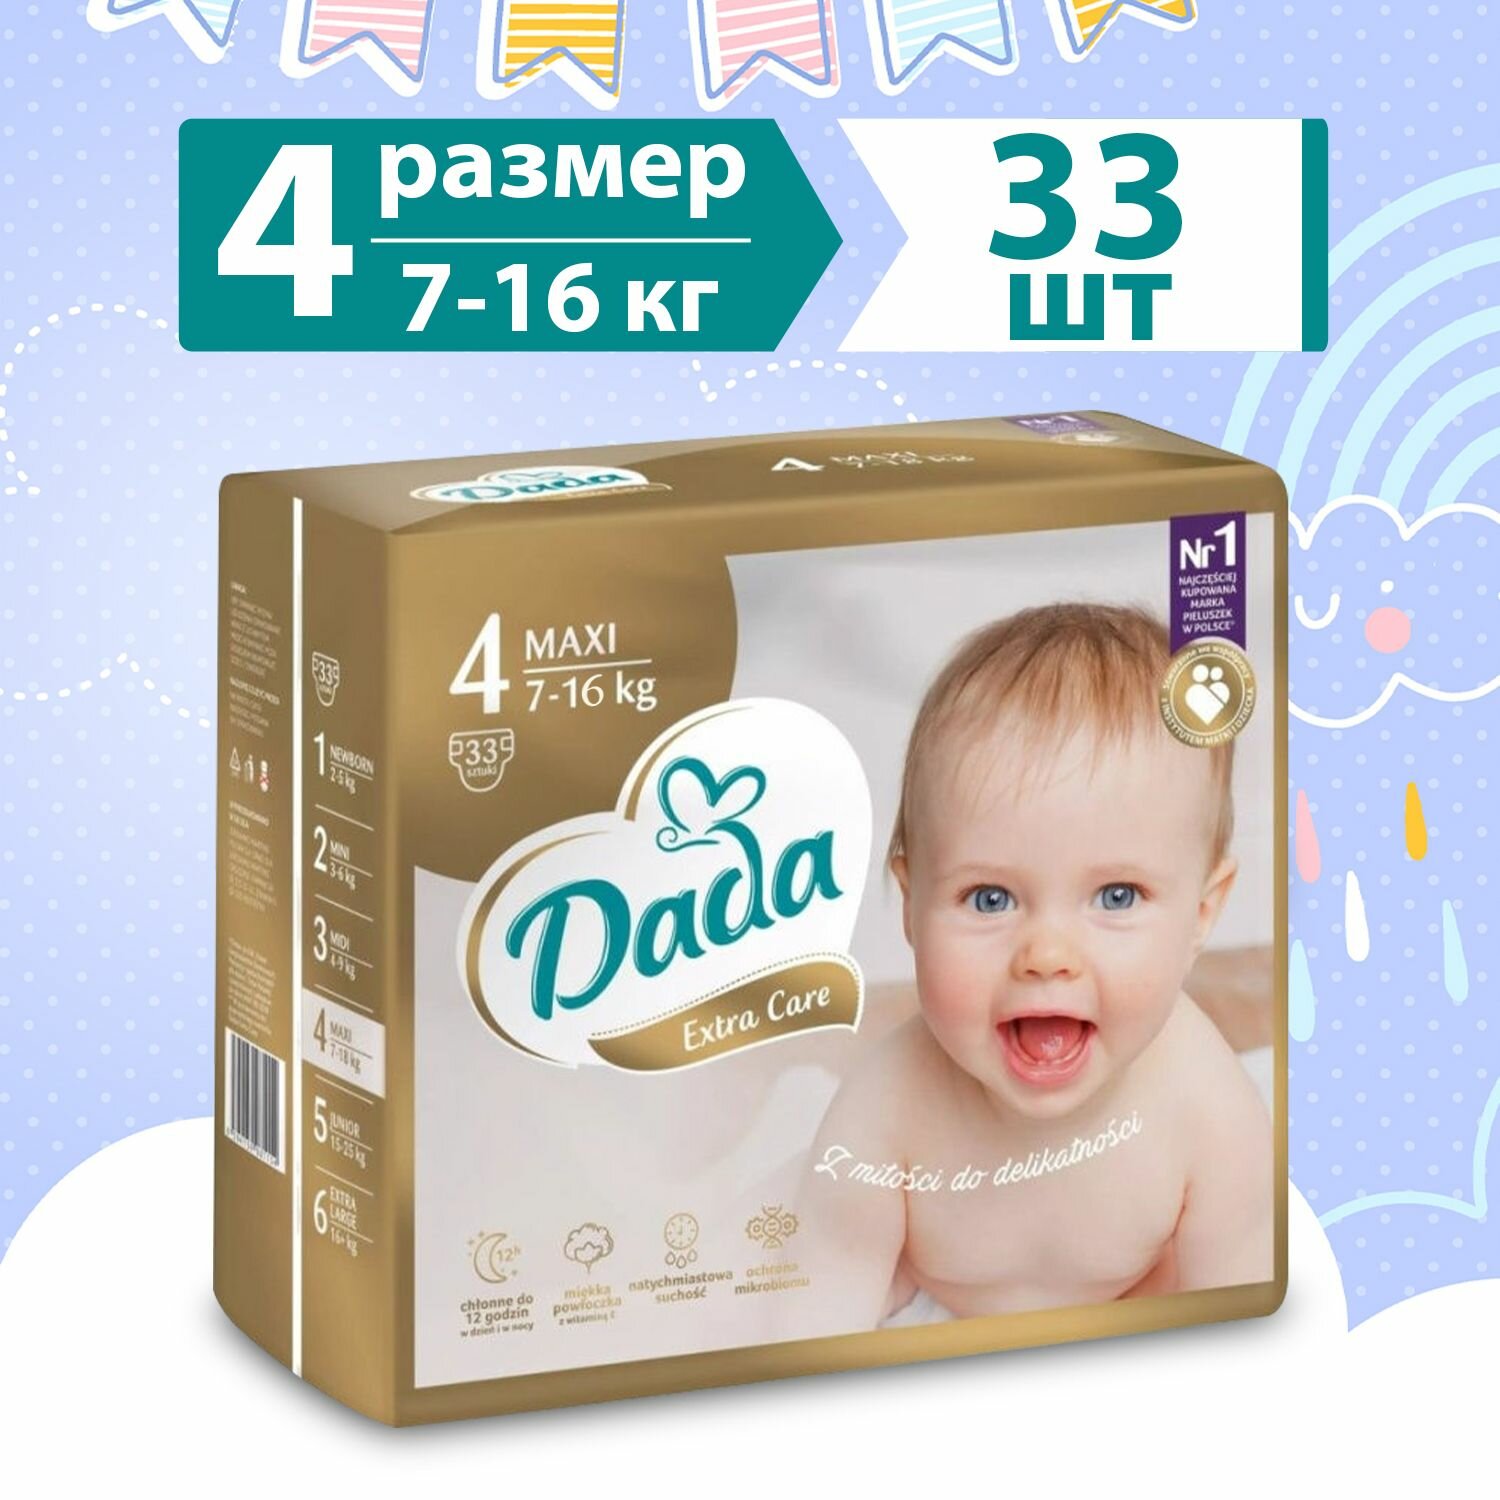 DADA Подгузники детские 4 размер (7-16 кг) Extra Care MAXI, 33 шт